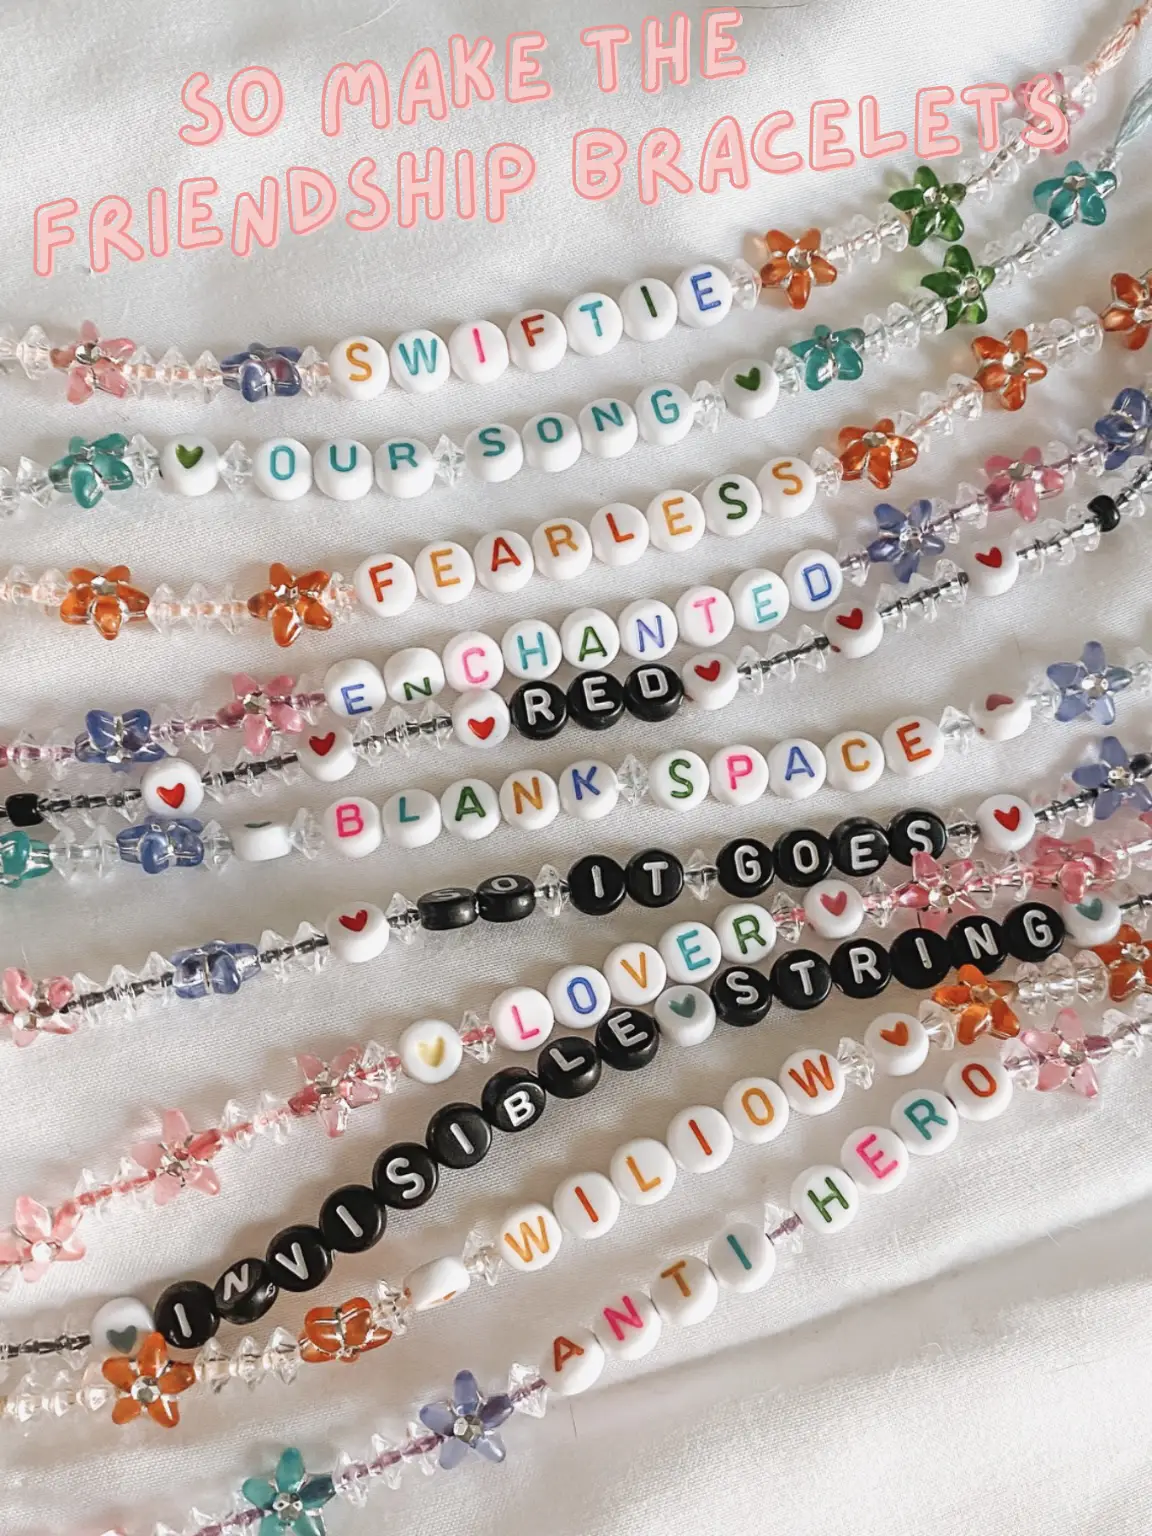 Taylor Swift Red friendship Bracelet  Friendship bracelets with beads,  Cute friendship bracelets, Letter bead bracelets